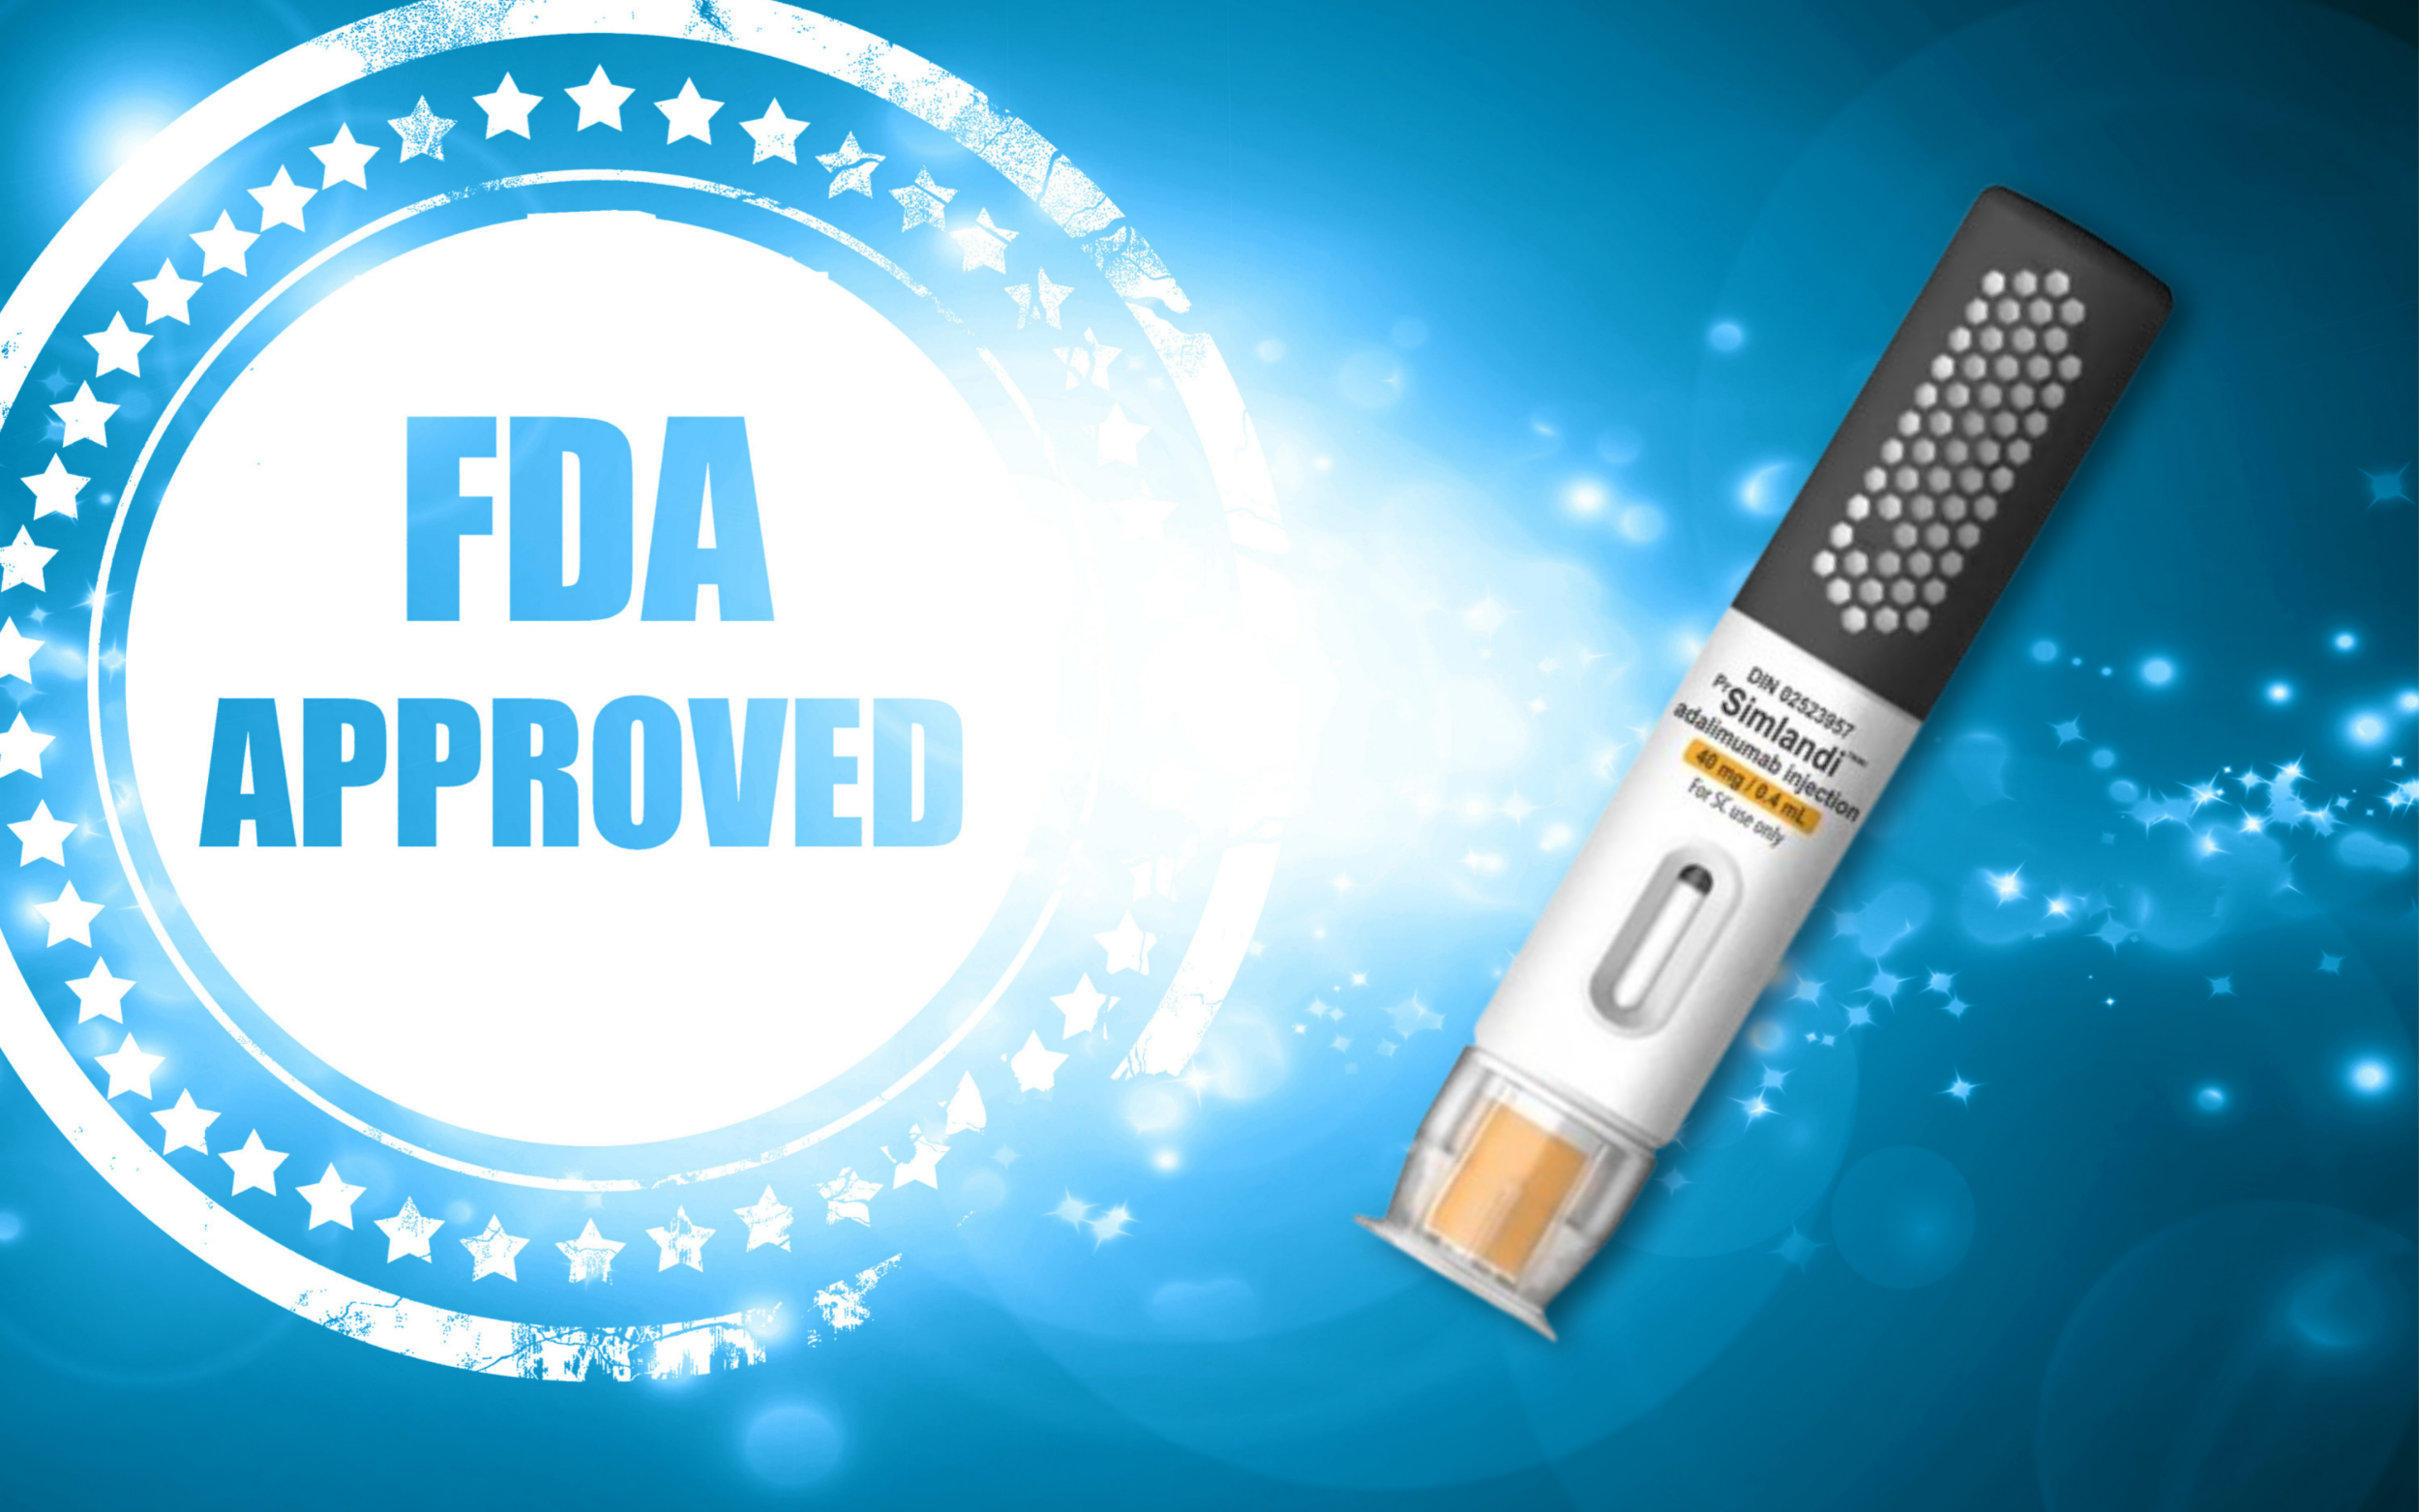 FDA approved | Image credit: Argus - stock.adobe.com